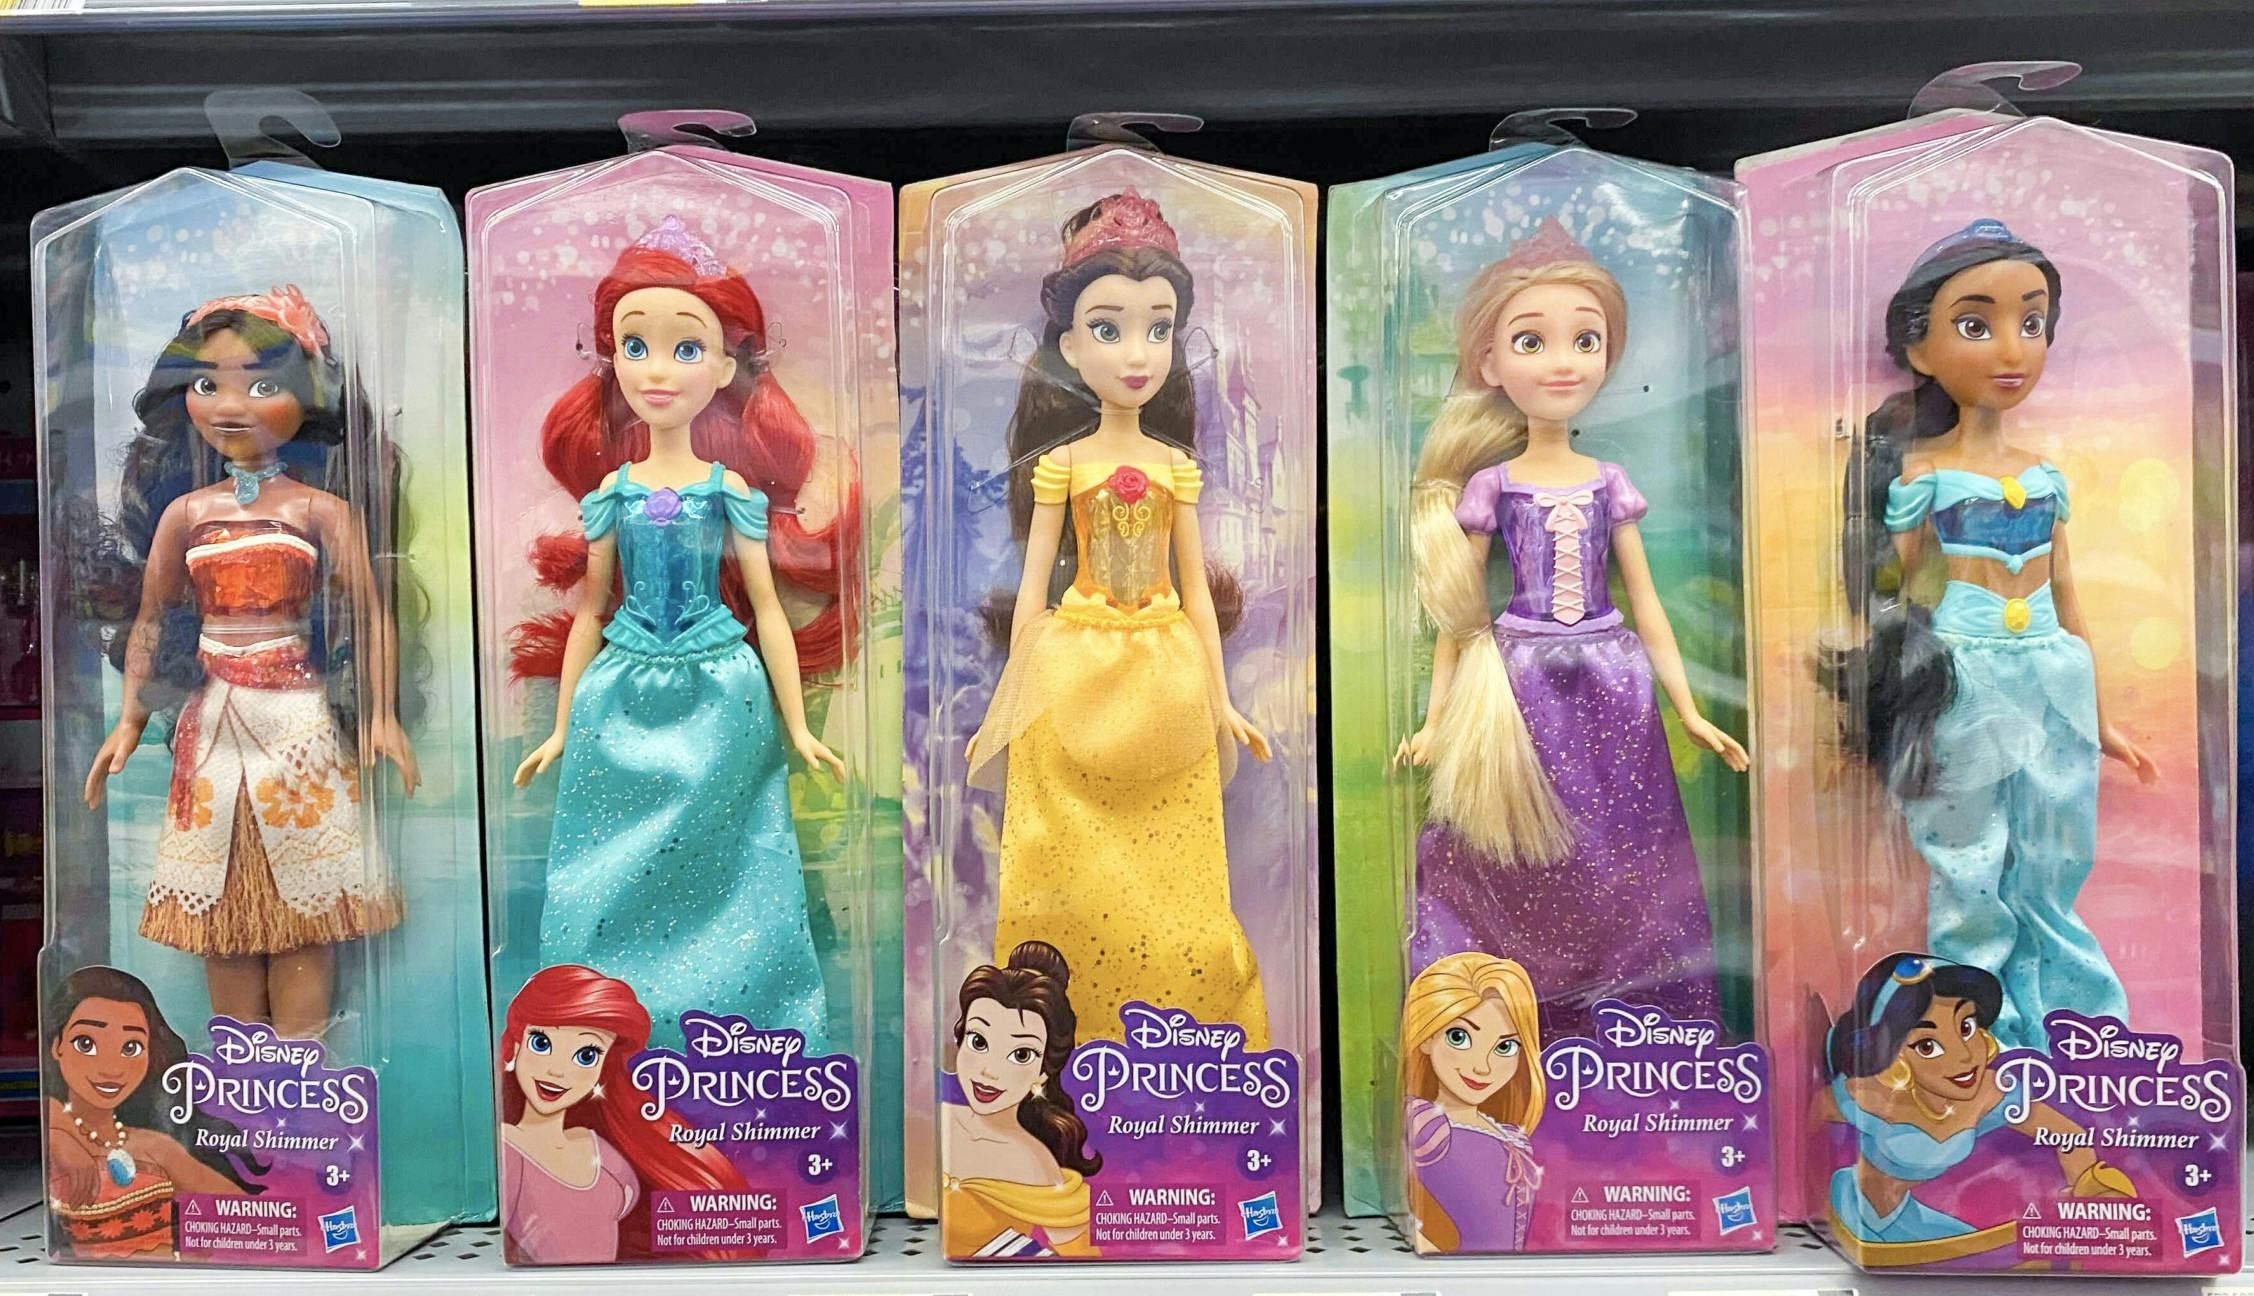 Disney Princess Royal Fashions and Friends Fashion Doll, Ariel, Moana, and Rapunzel, Ages 4+